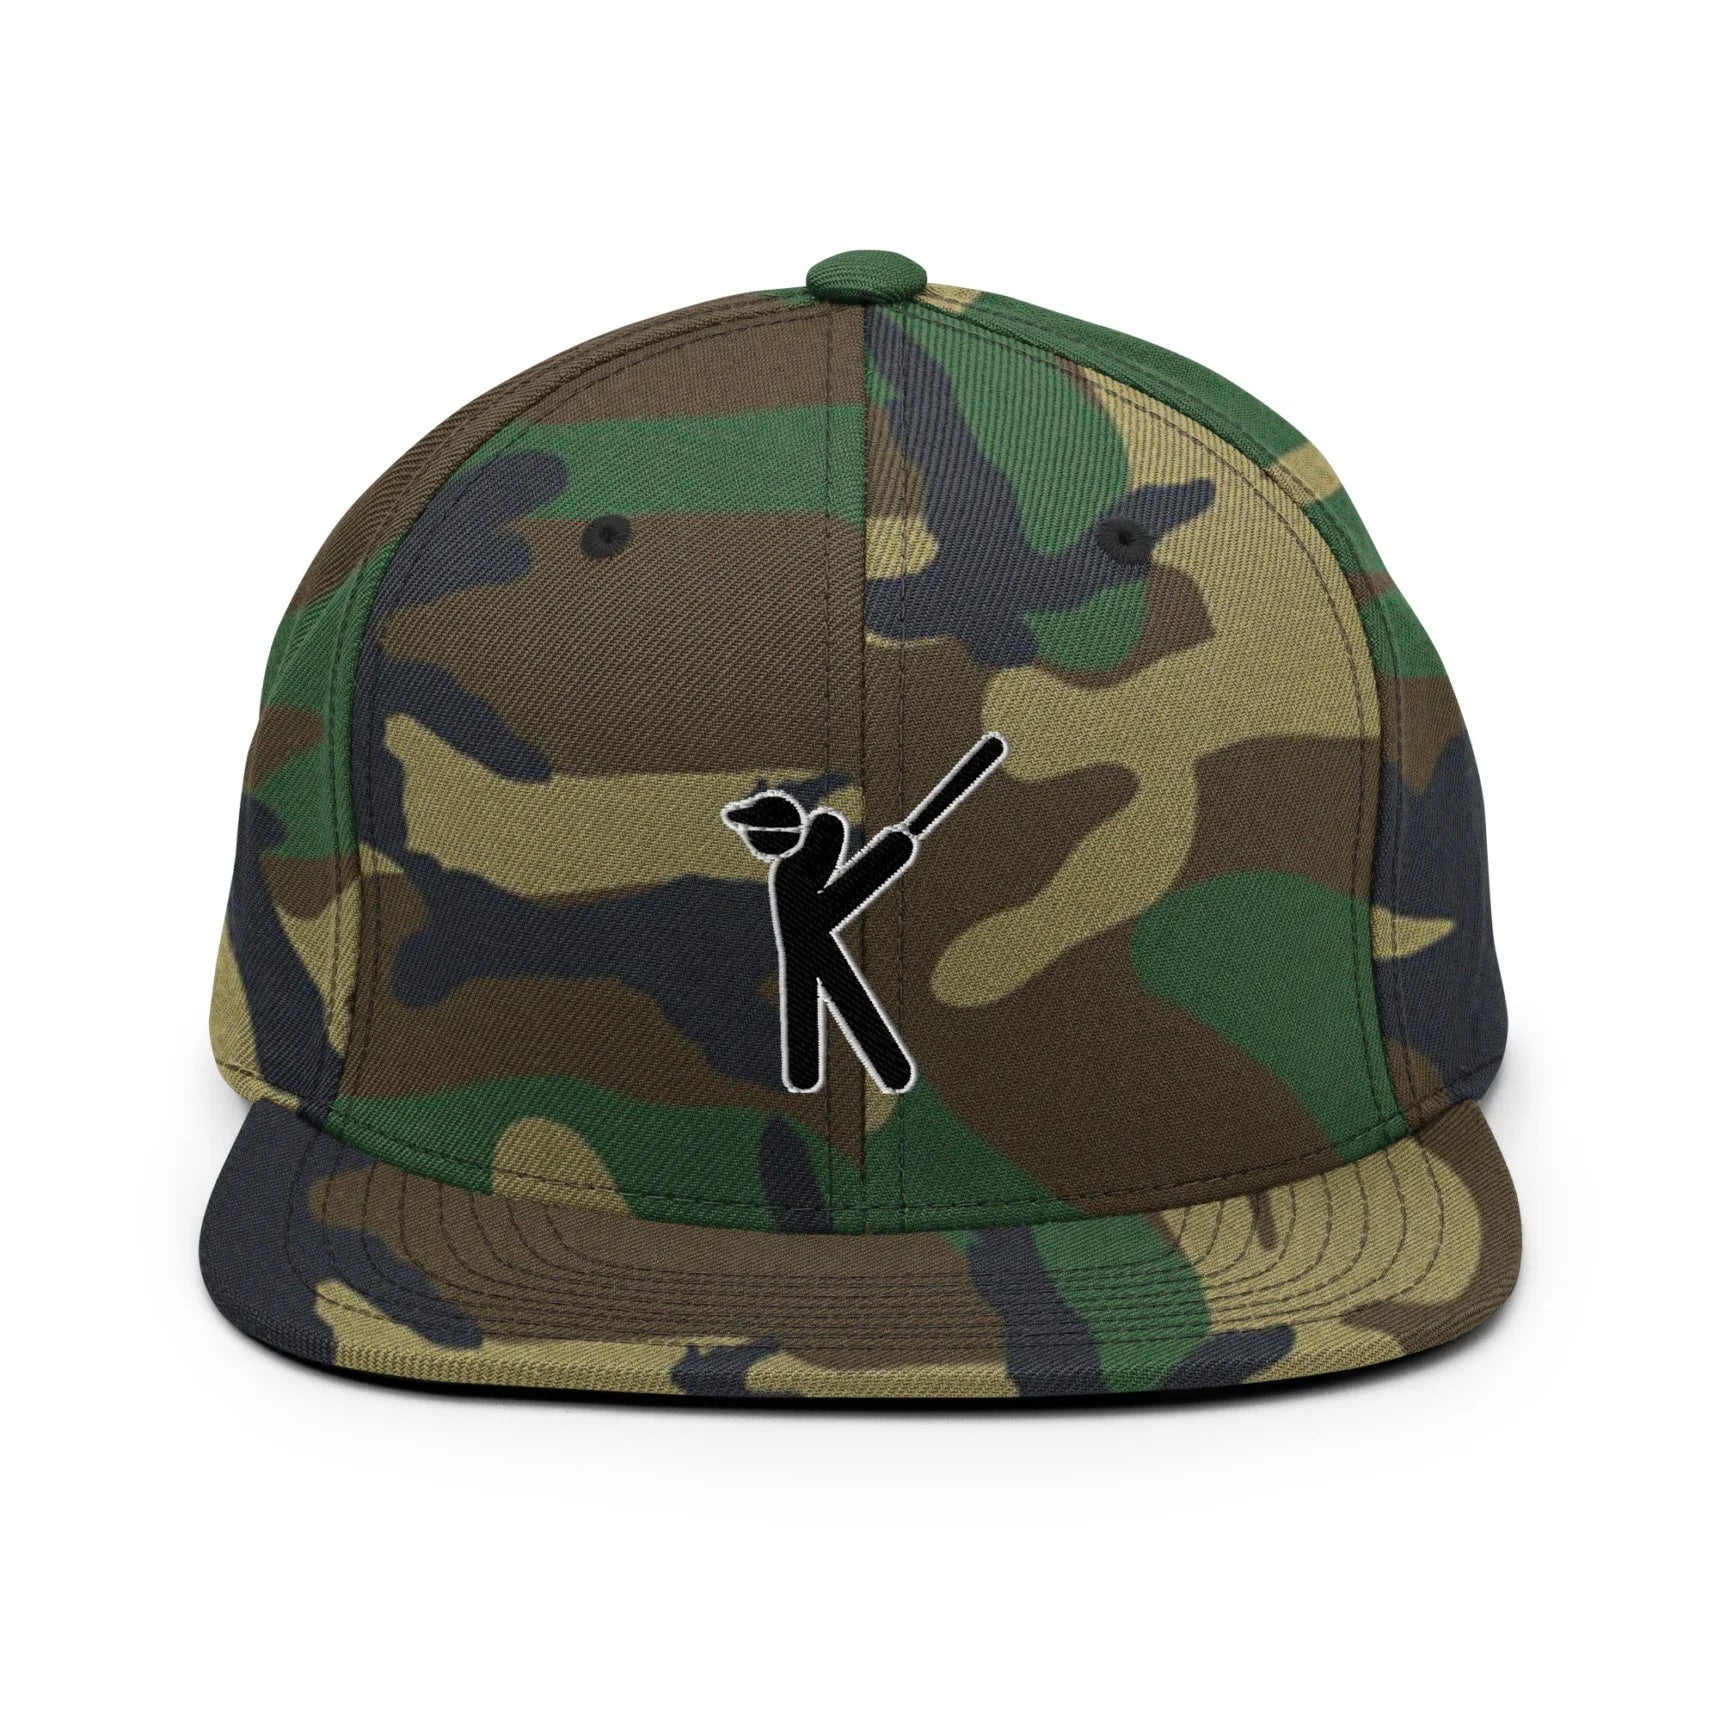 Kasabe ShowZone snapback hat with Camouflage print